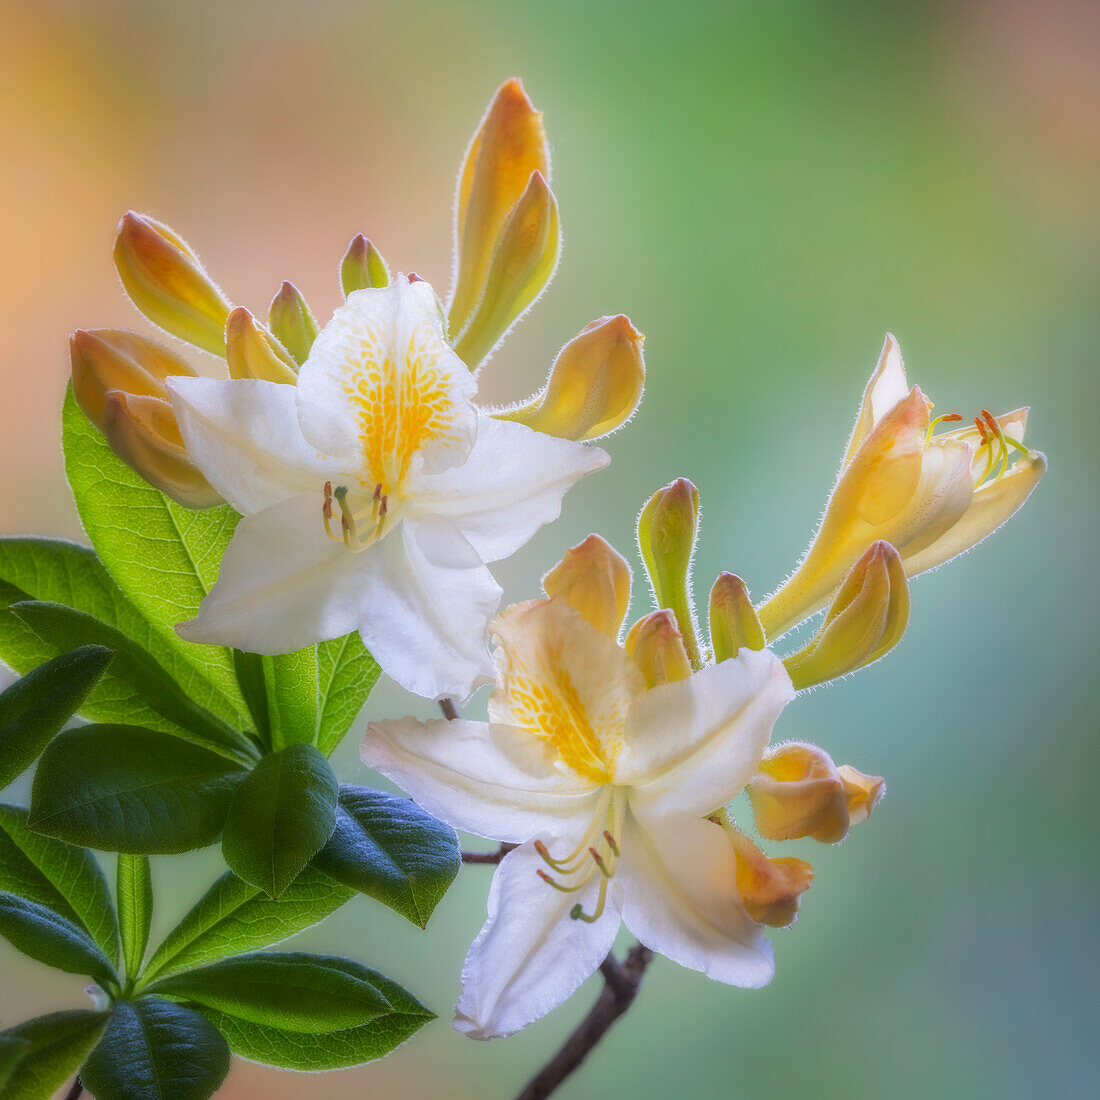 USA, Washington State, Seabeck. White and yellow azalea flowers.